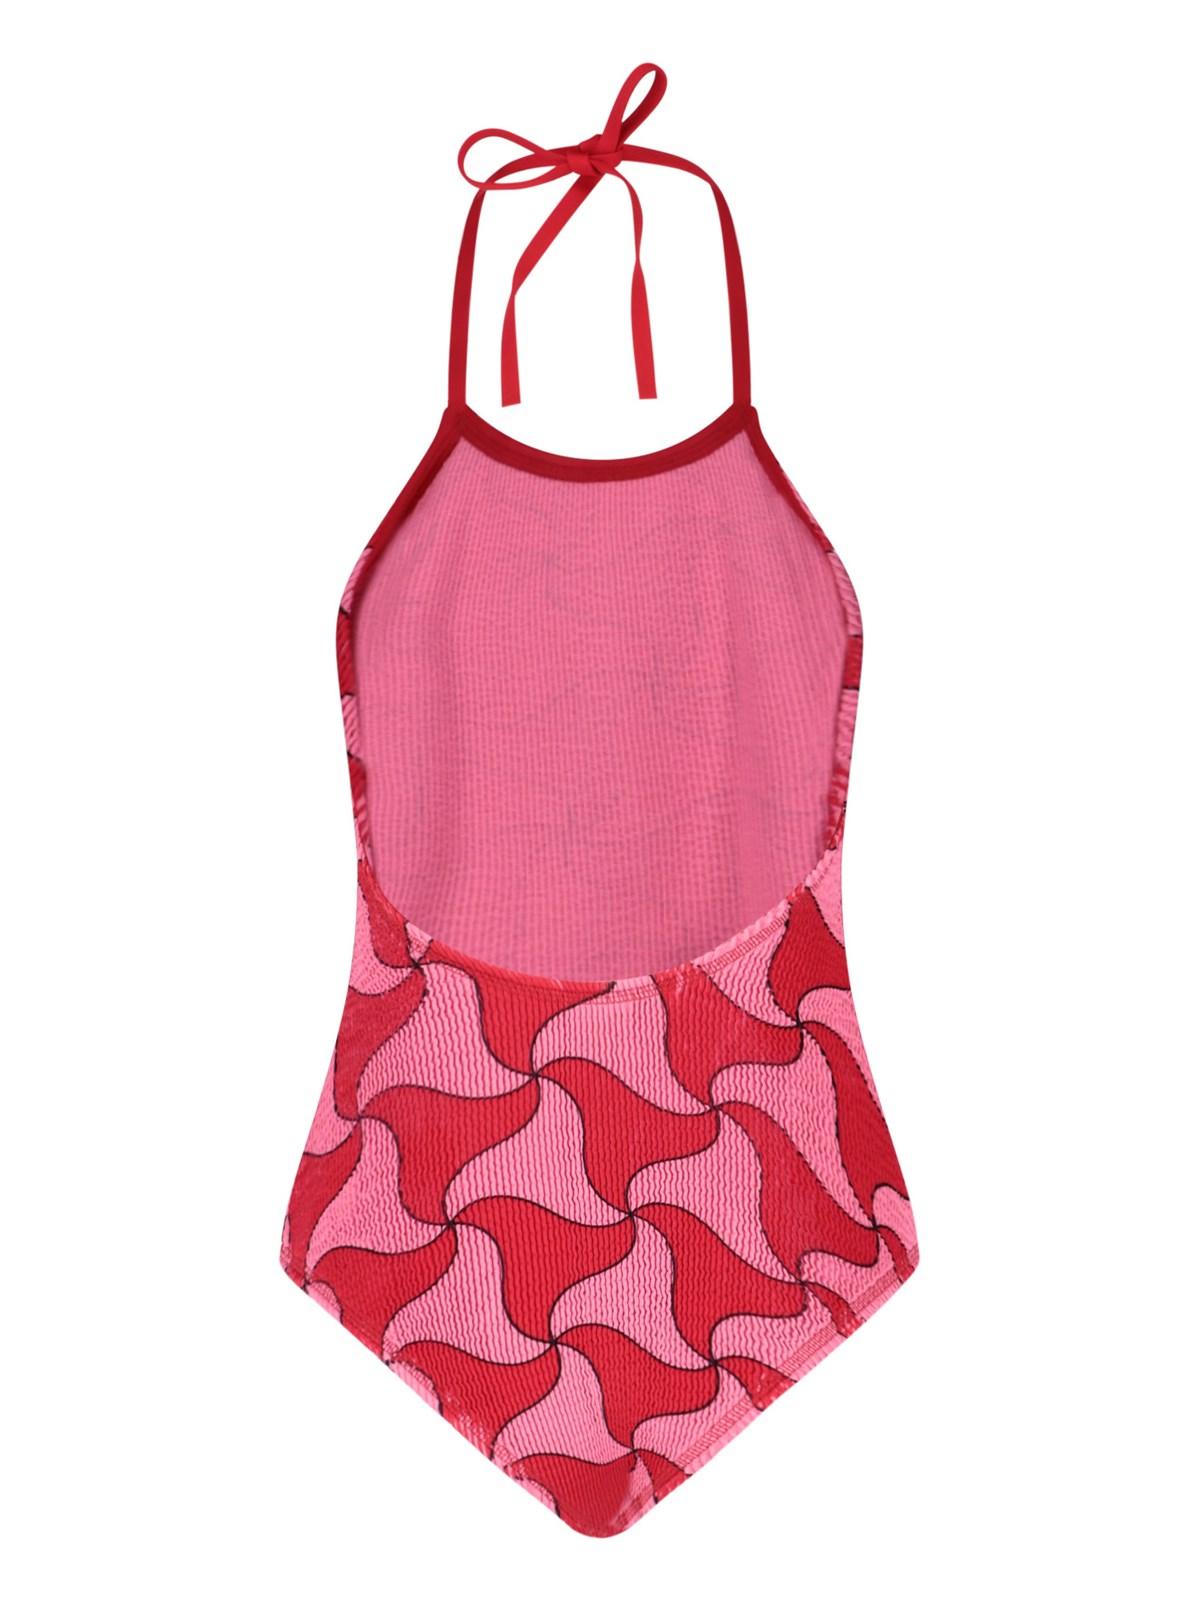 Bottega Veneta Printed One-piece Swimsuit in Red | Lyst